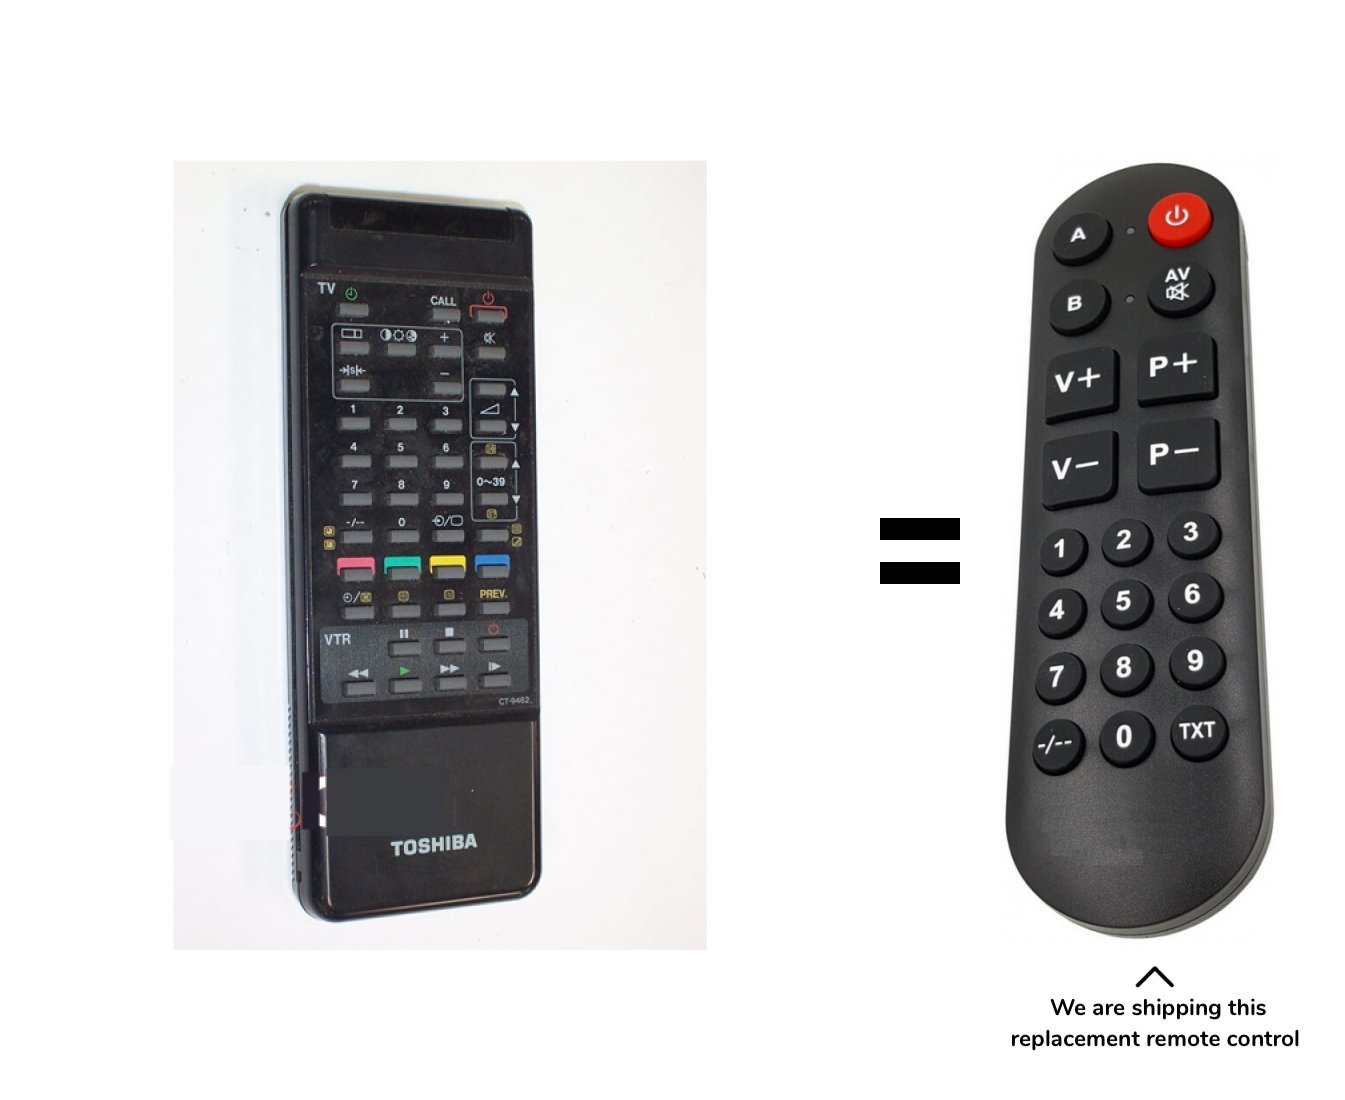 Toshiba 2100TD remote control for seniors